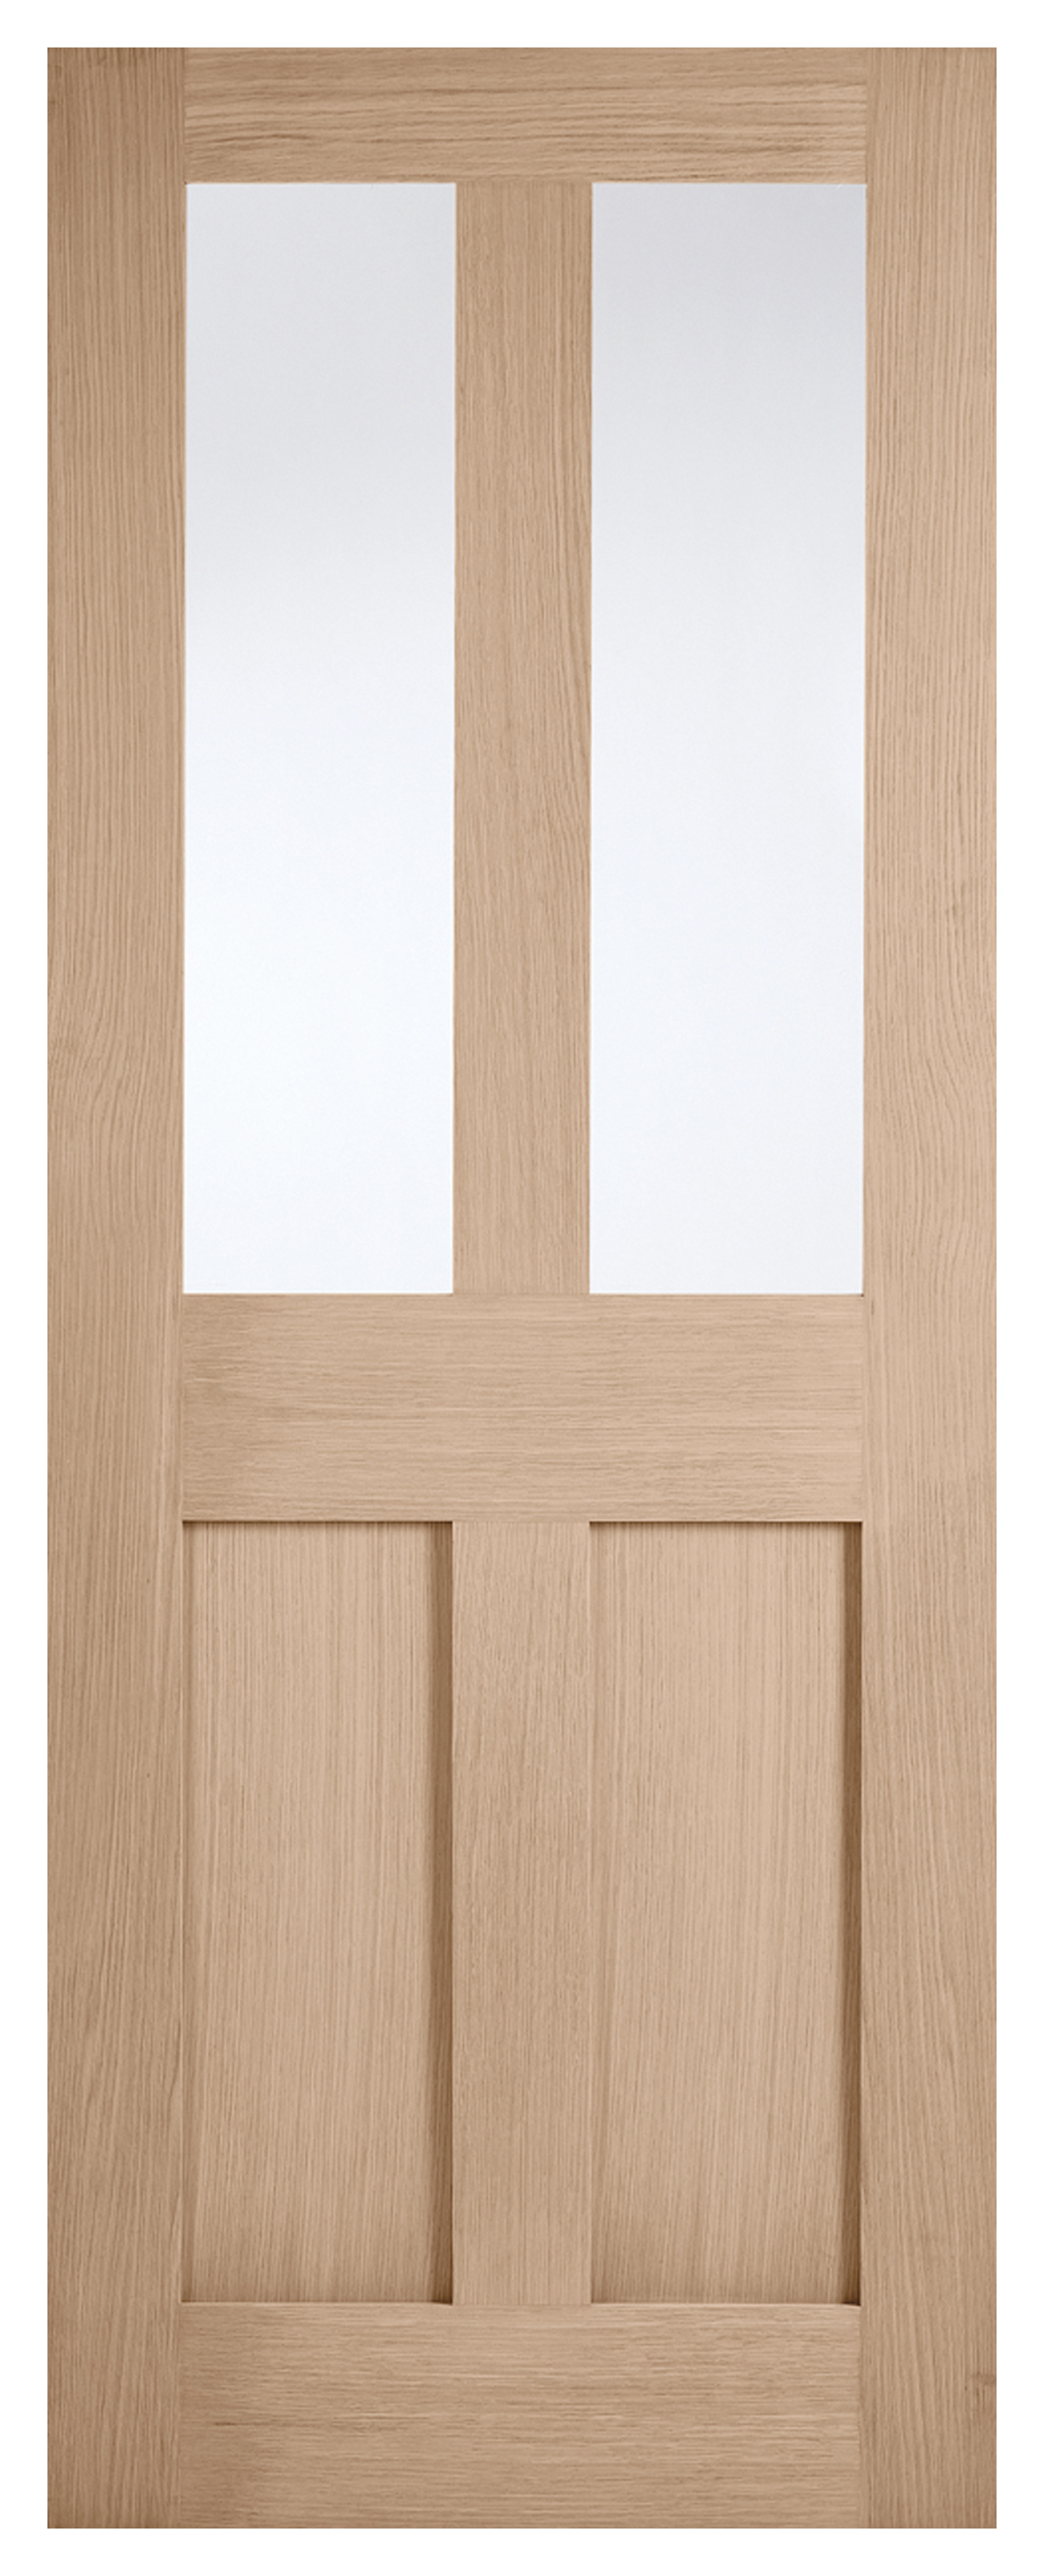 Image of LPD Internal London 2 Lite Unfinished Oak Solid Core Door - 838 x 1981mm